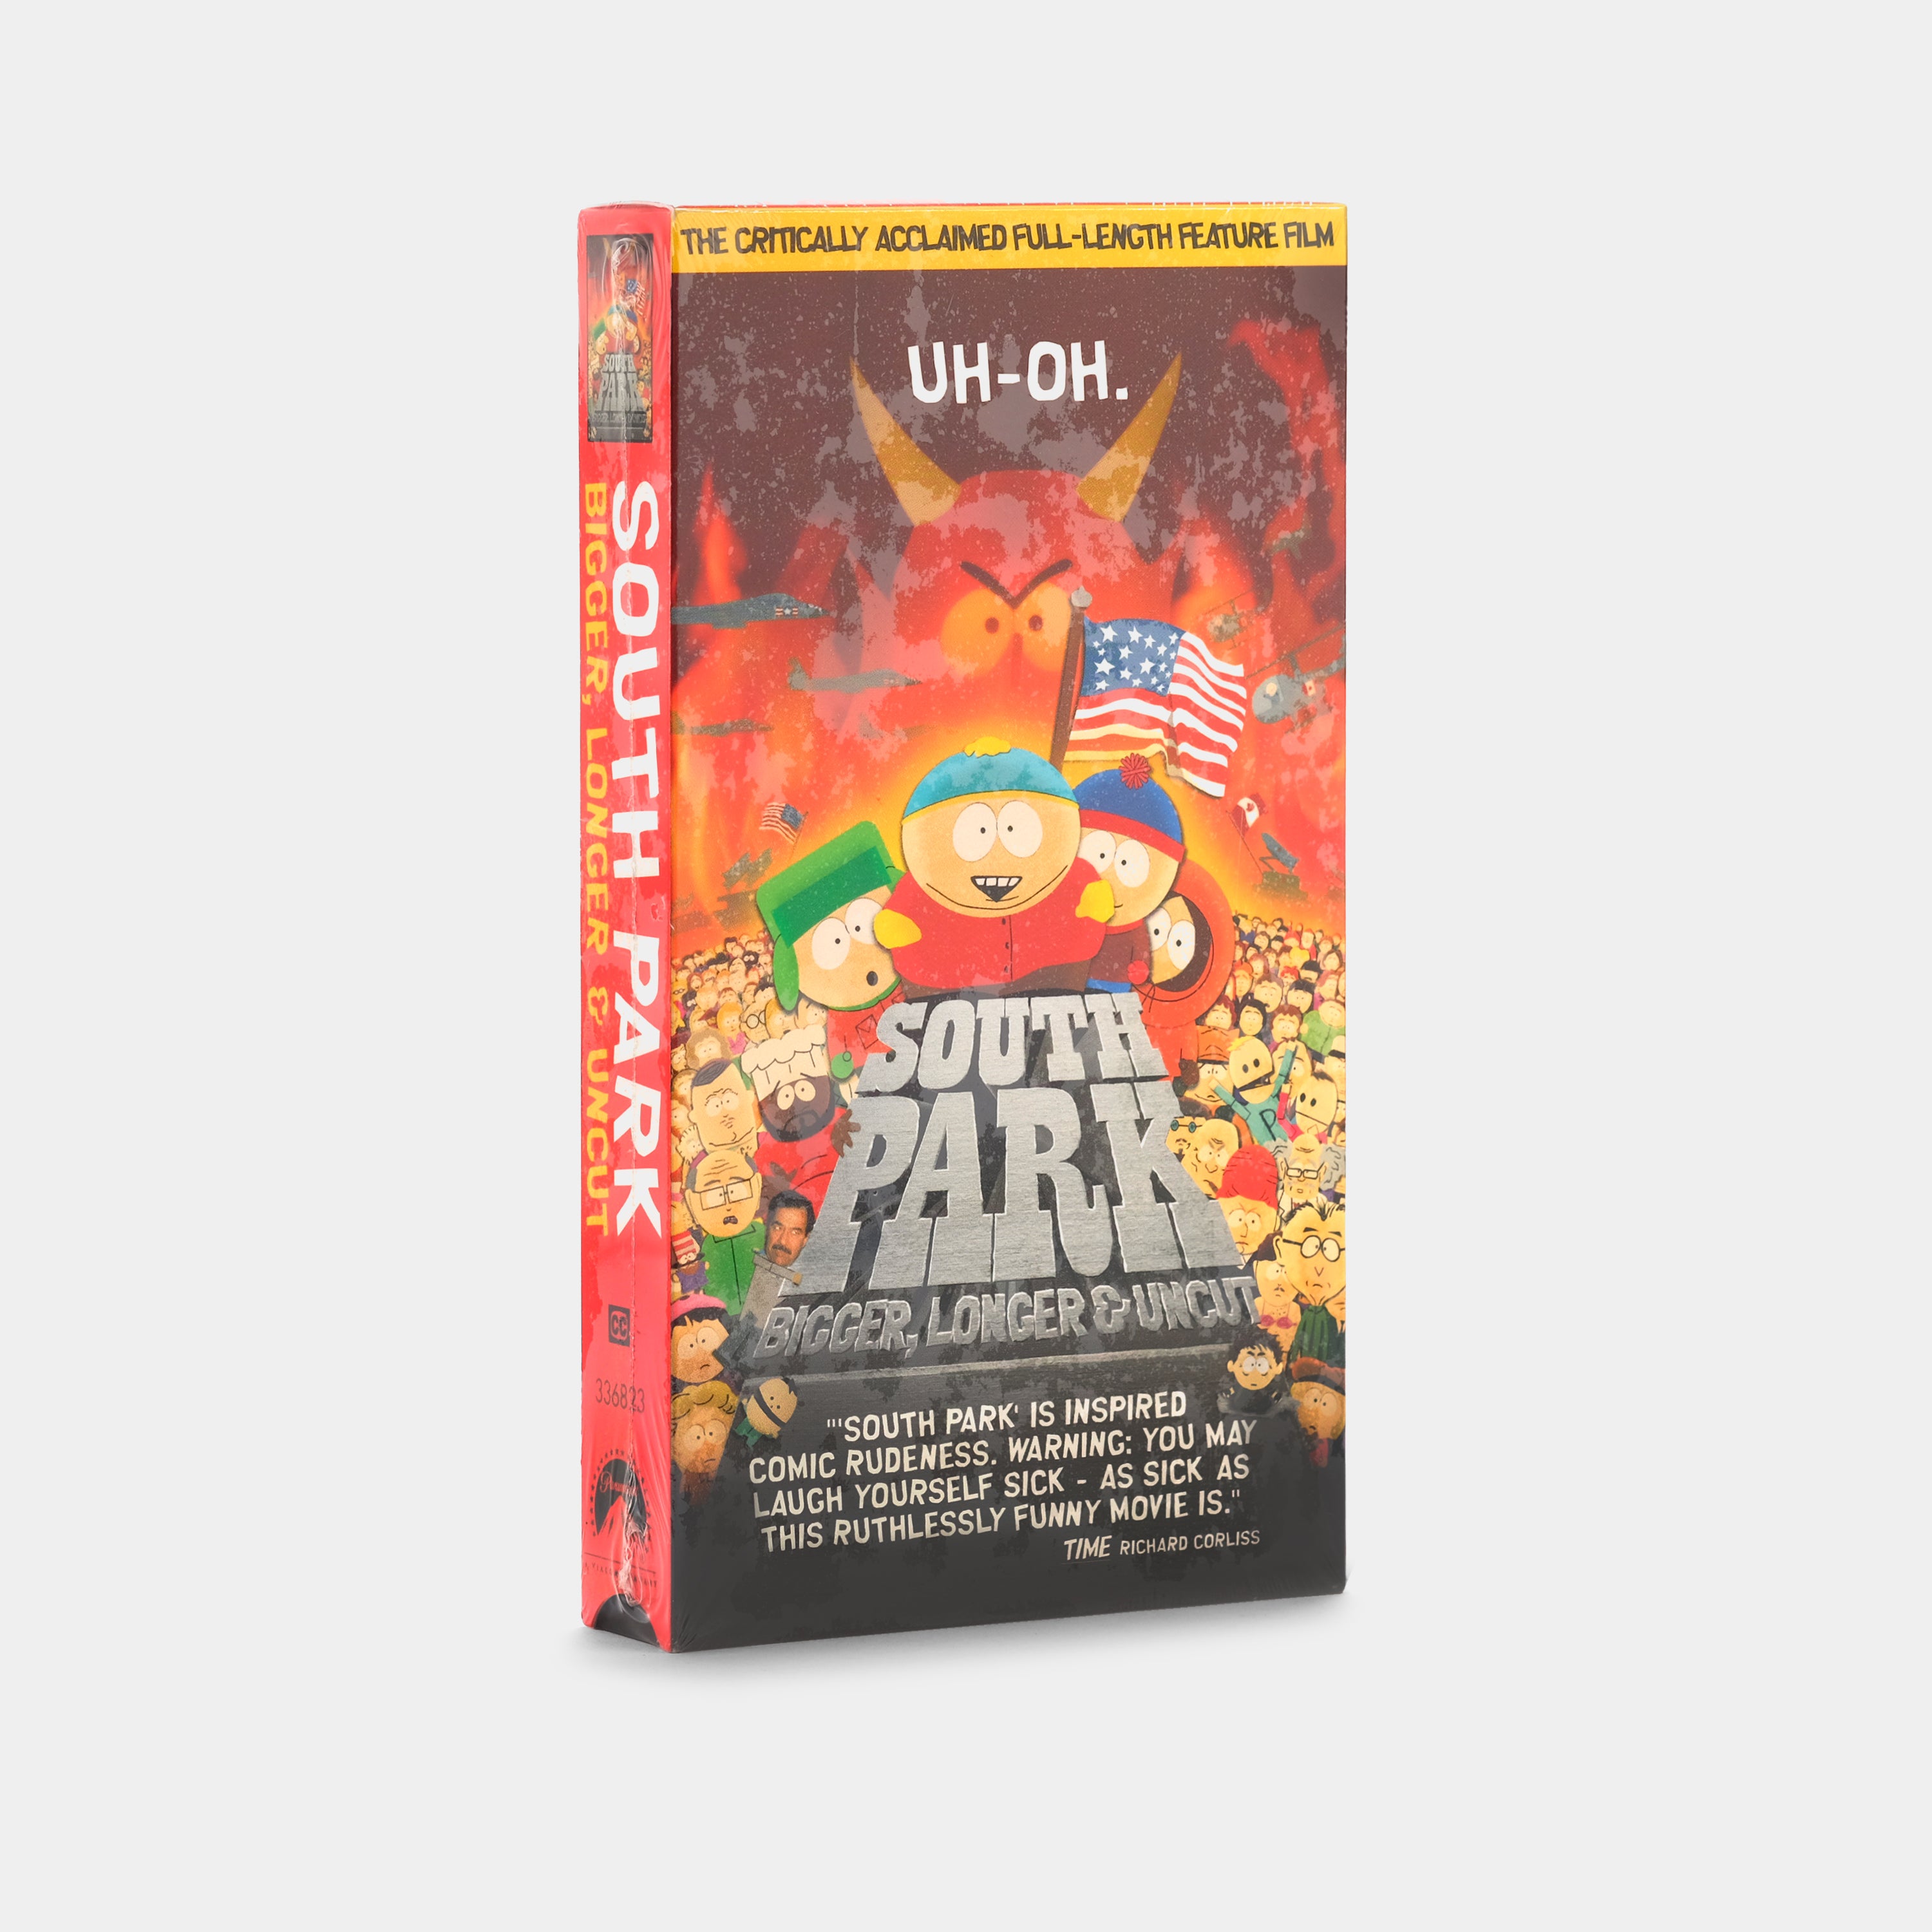 South Park: Bigger, Longer & Uncut (Sealed) VHS Tape